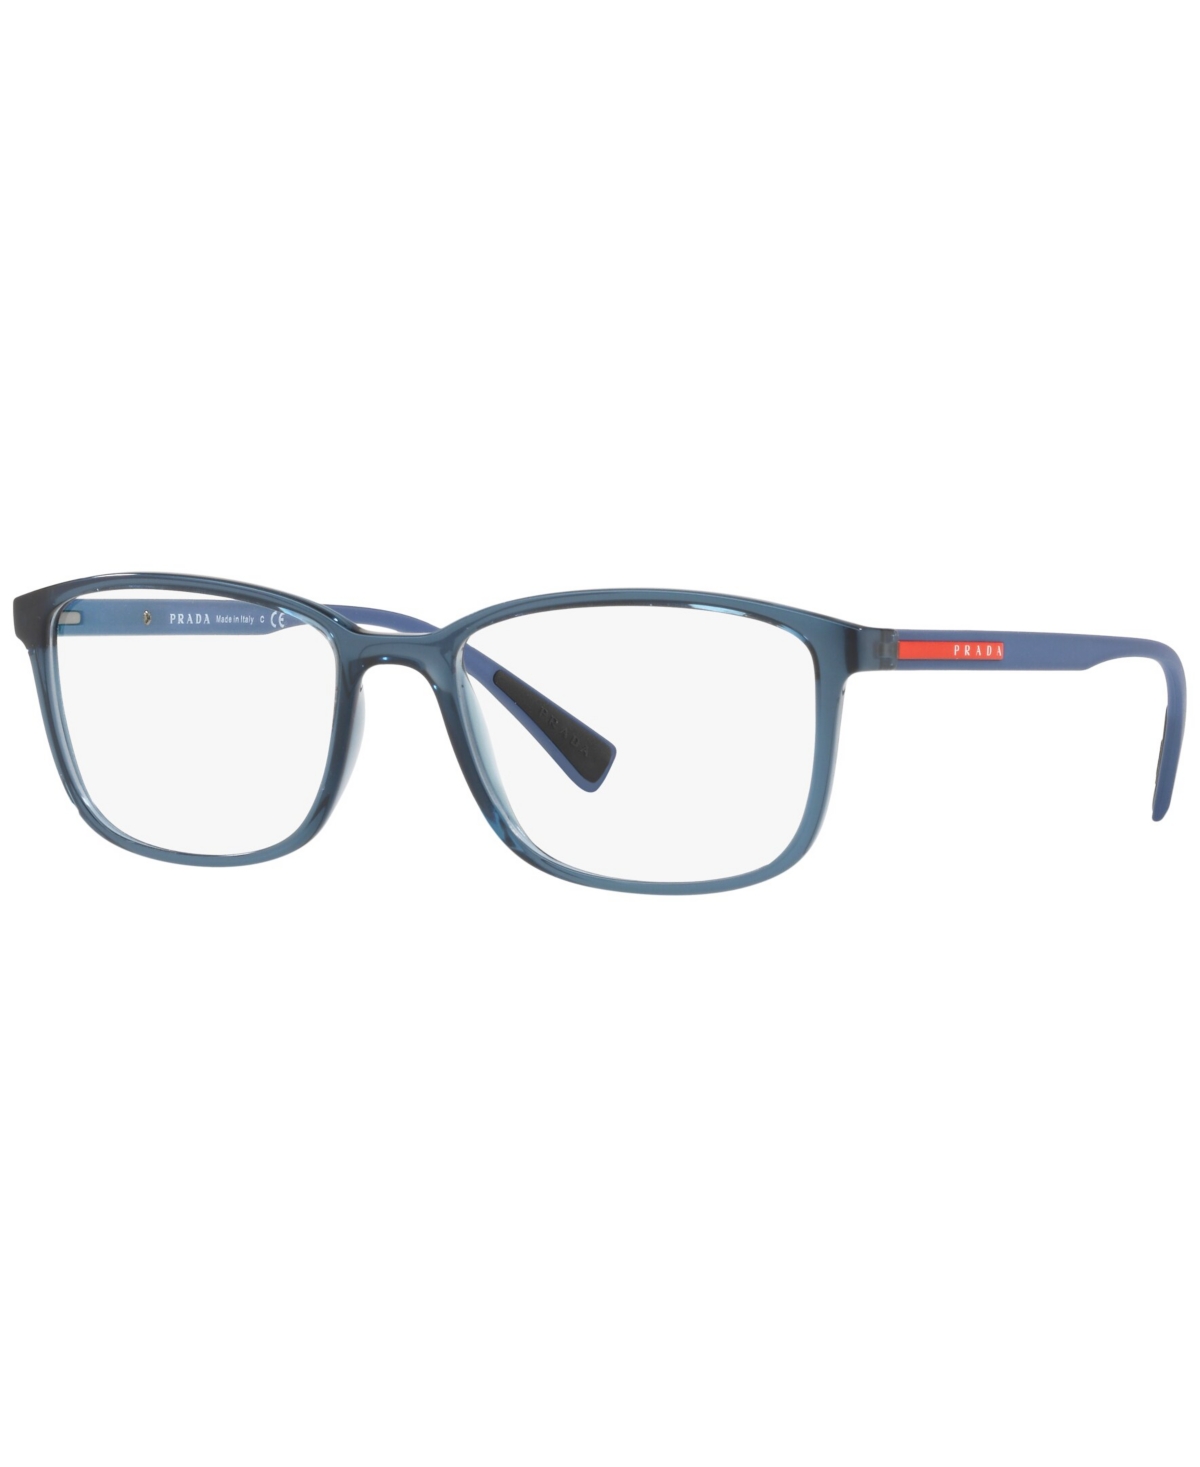 Ps 04IV Men's Rectangle Eyeglasses - Transparent Azure